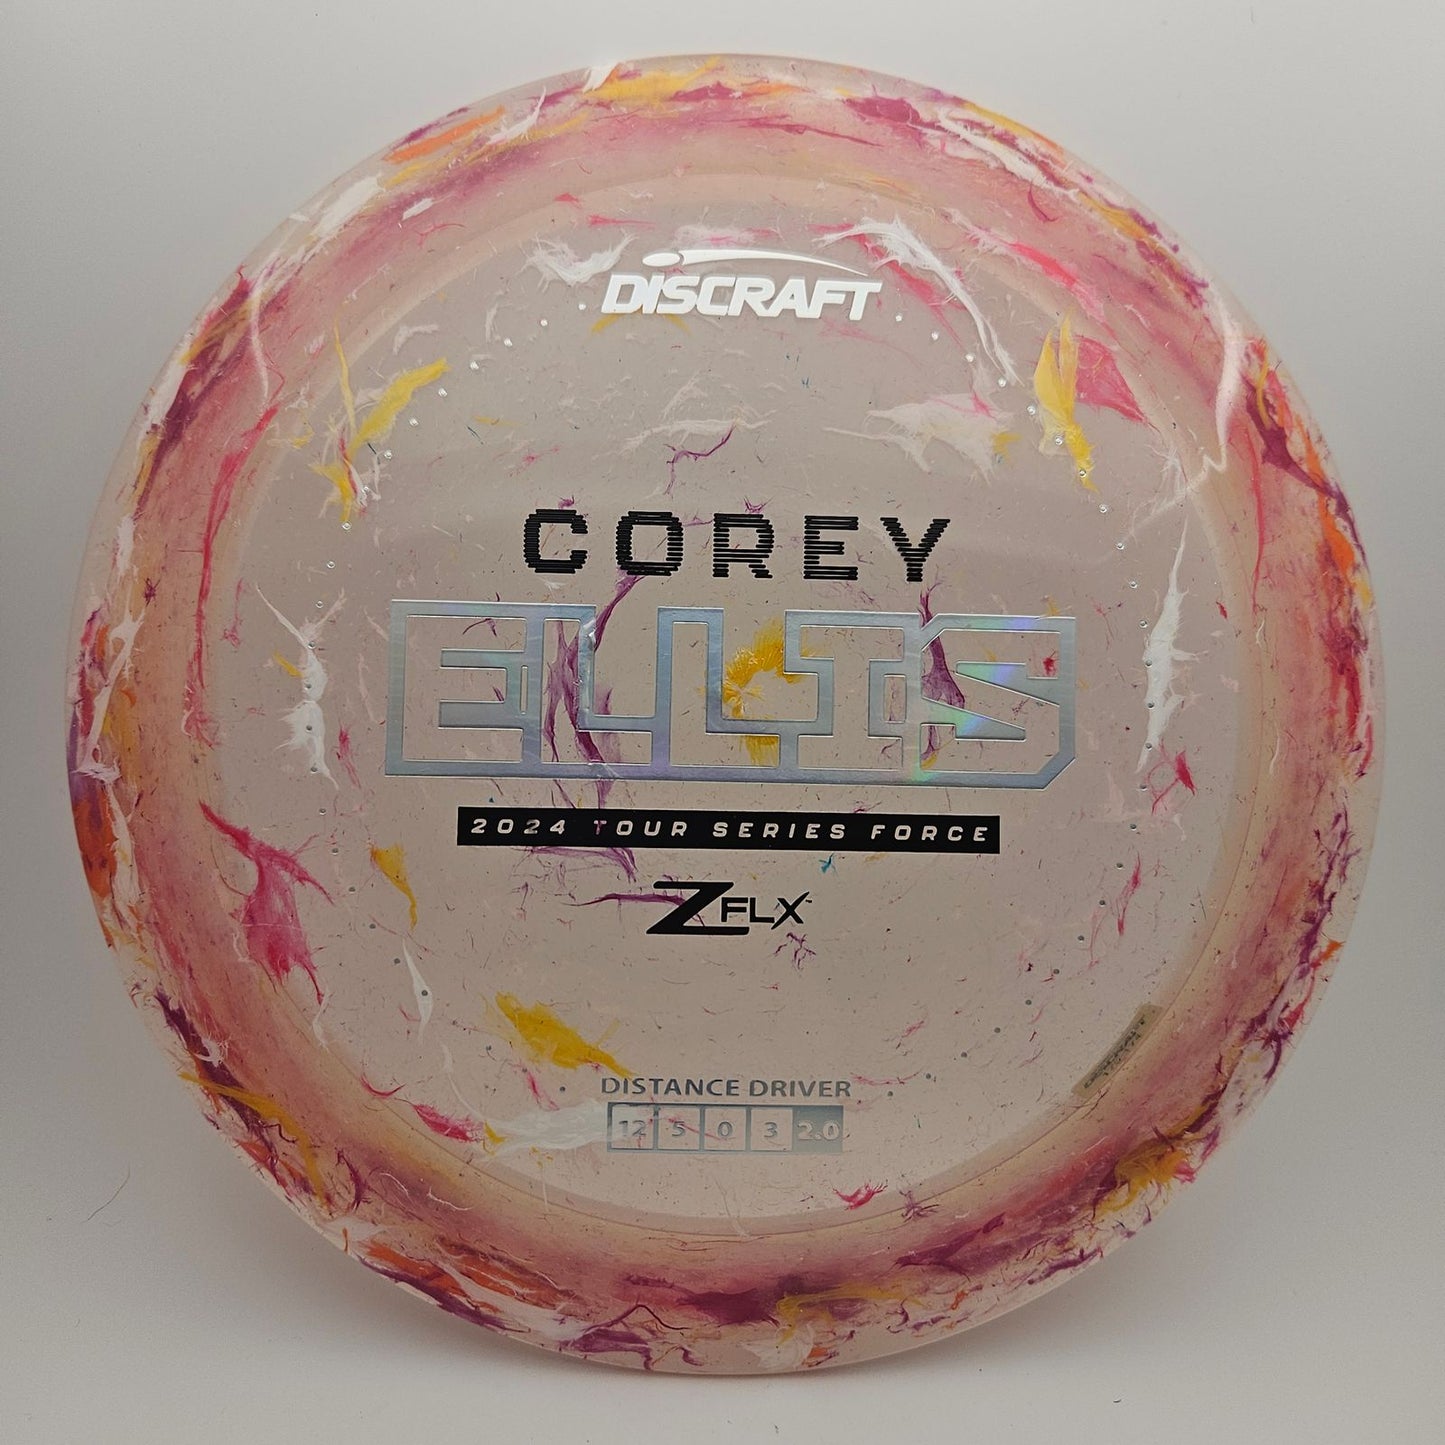 #5125 173-174g Peach, Corey Ellis TS Jawbreaker Z Flx Force - Corey Ellis Tour Series